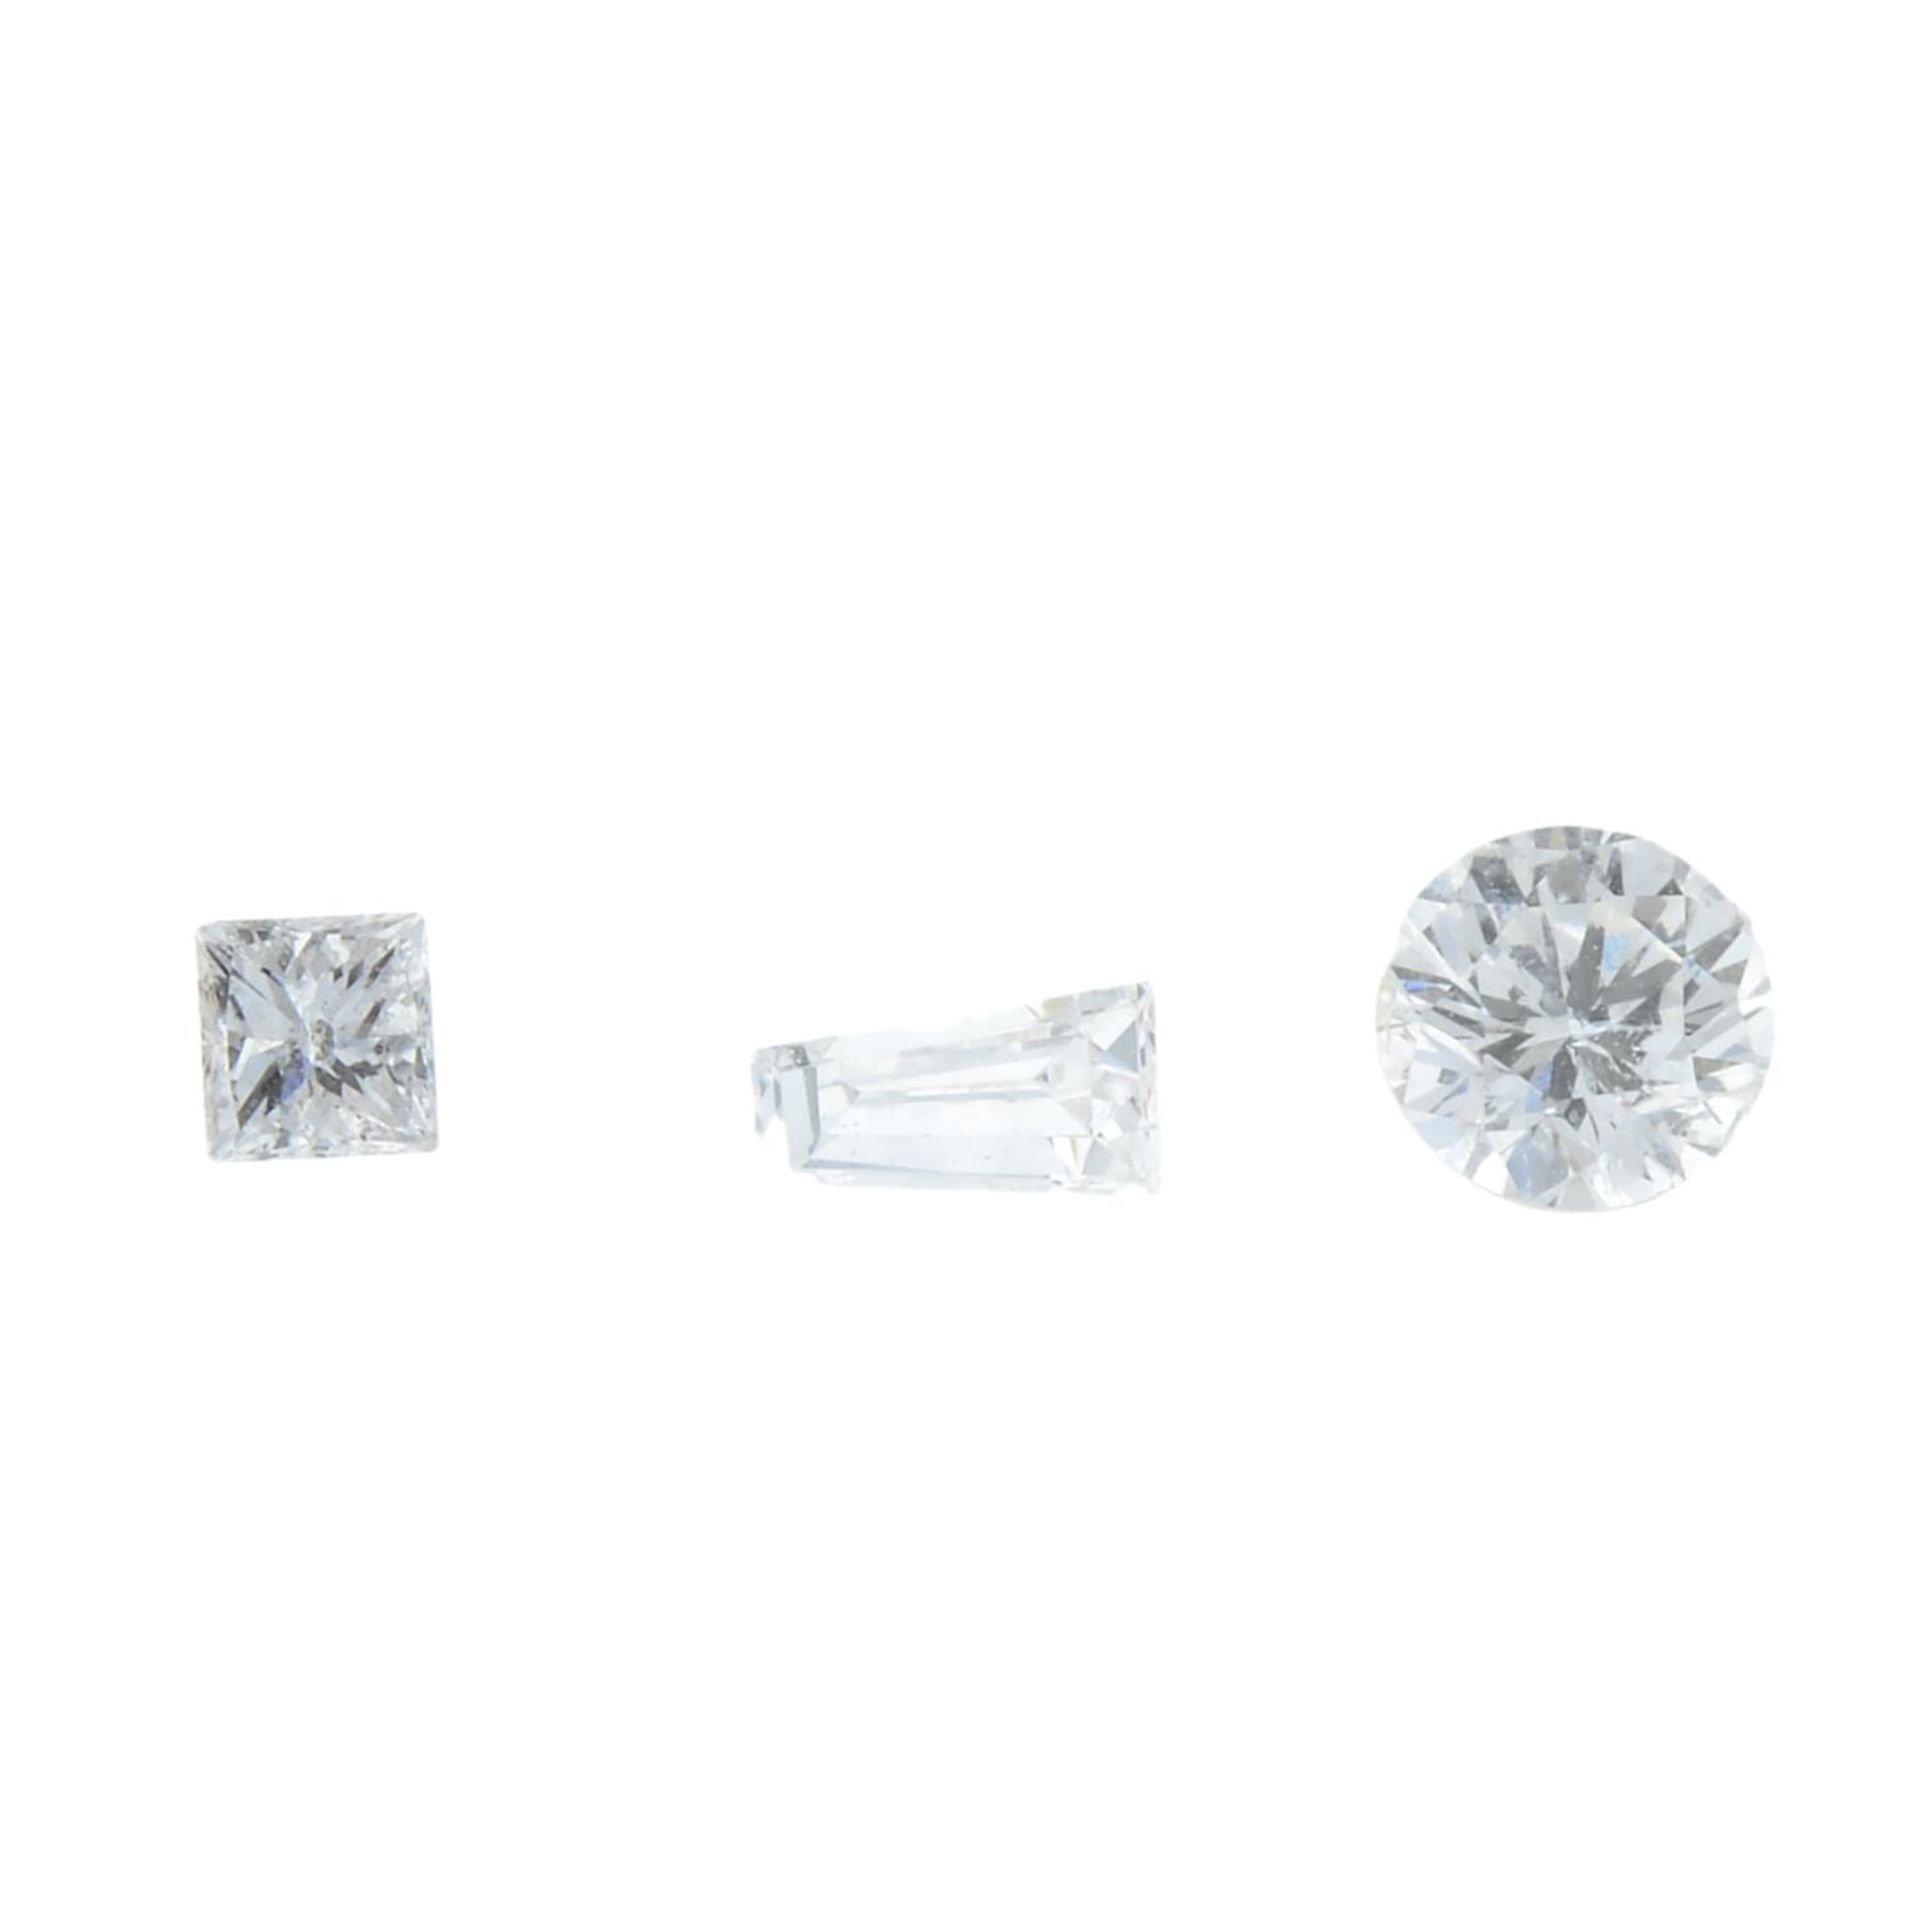 A small selection of vari-cut diamonds.